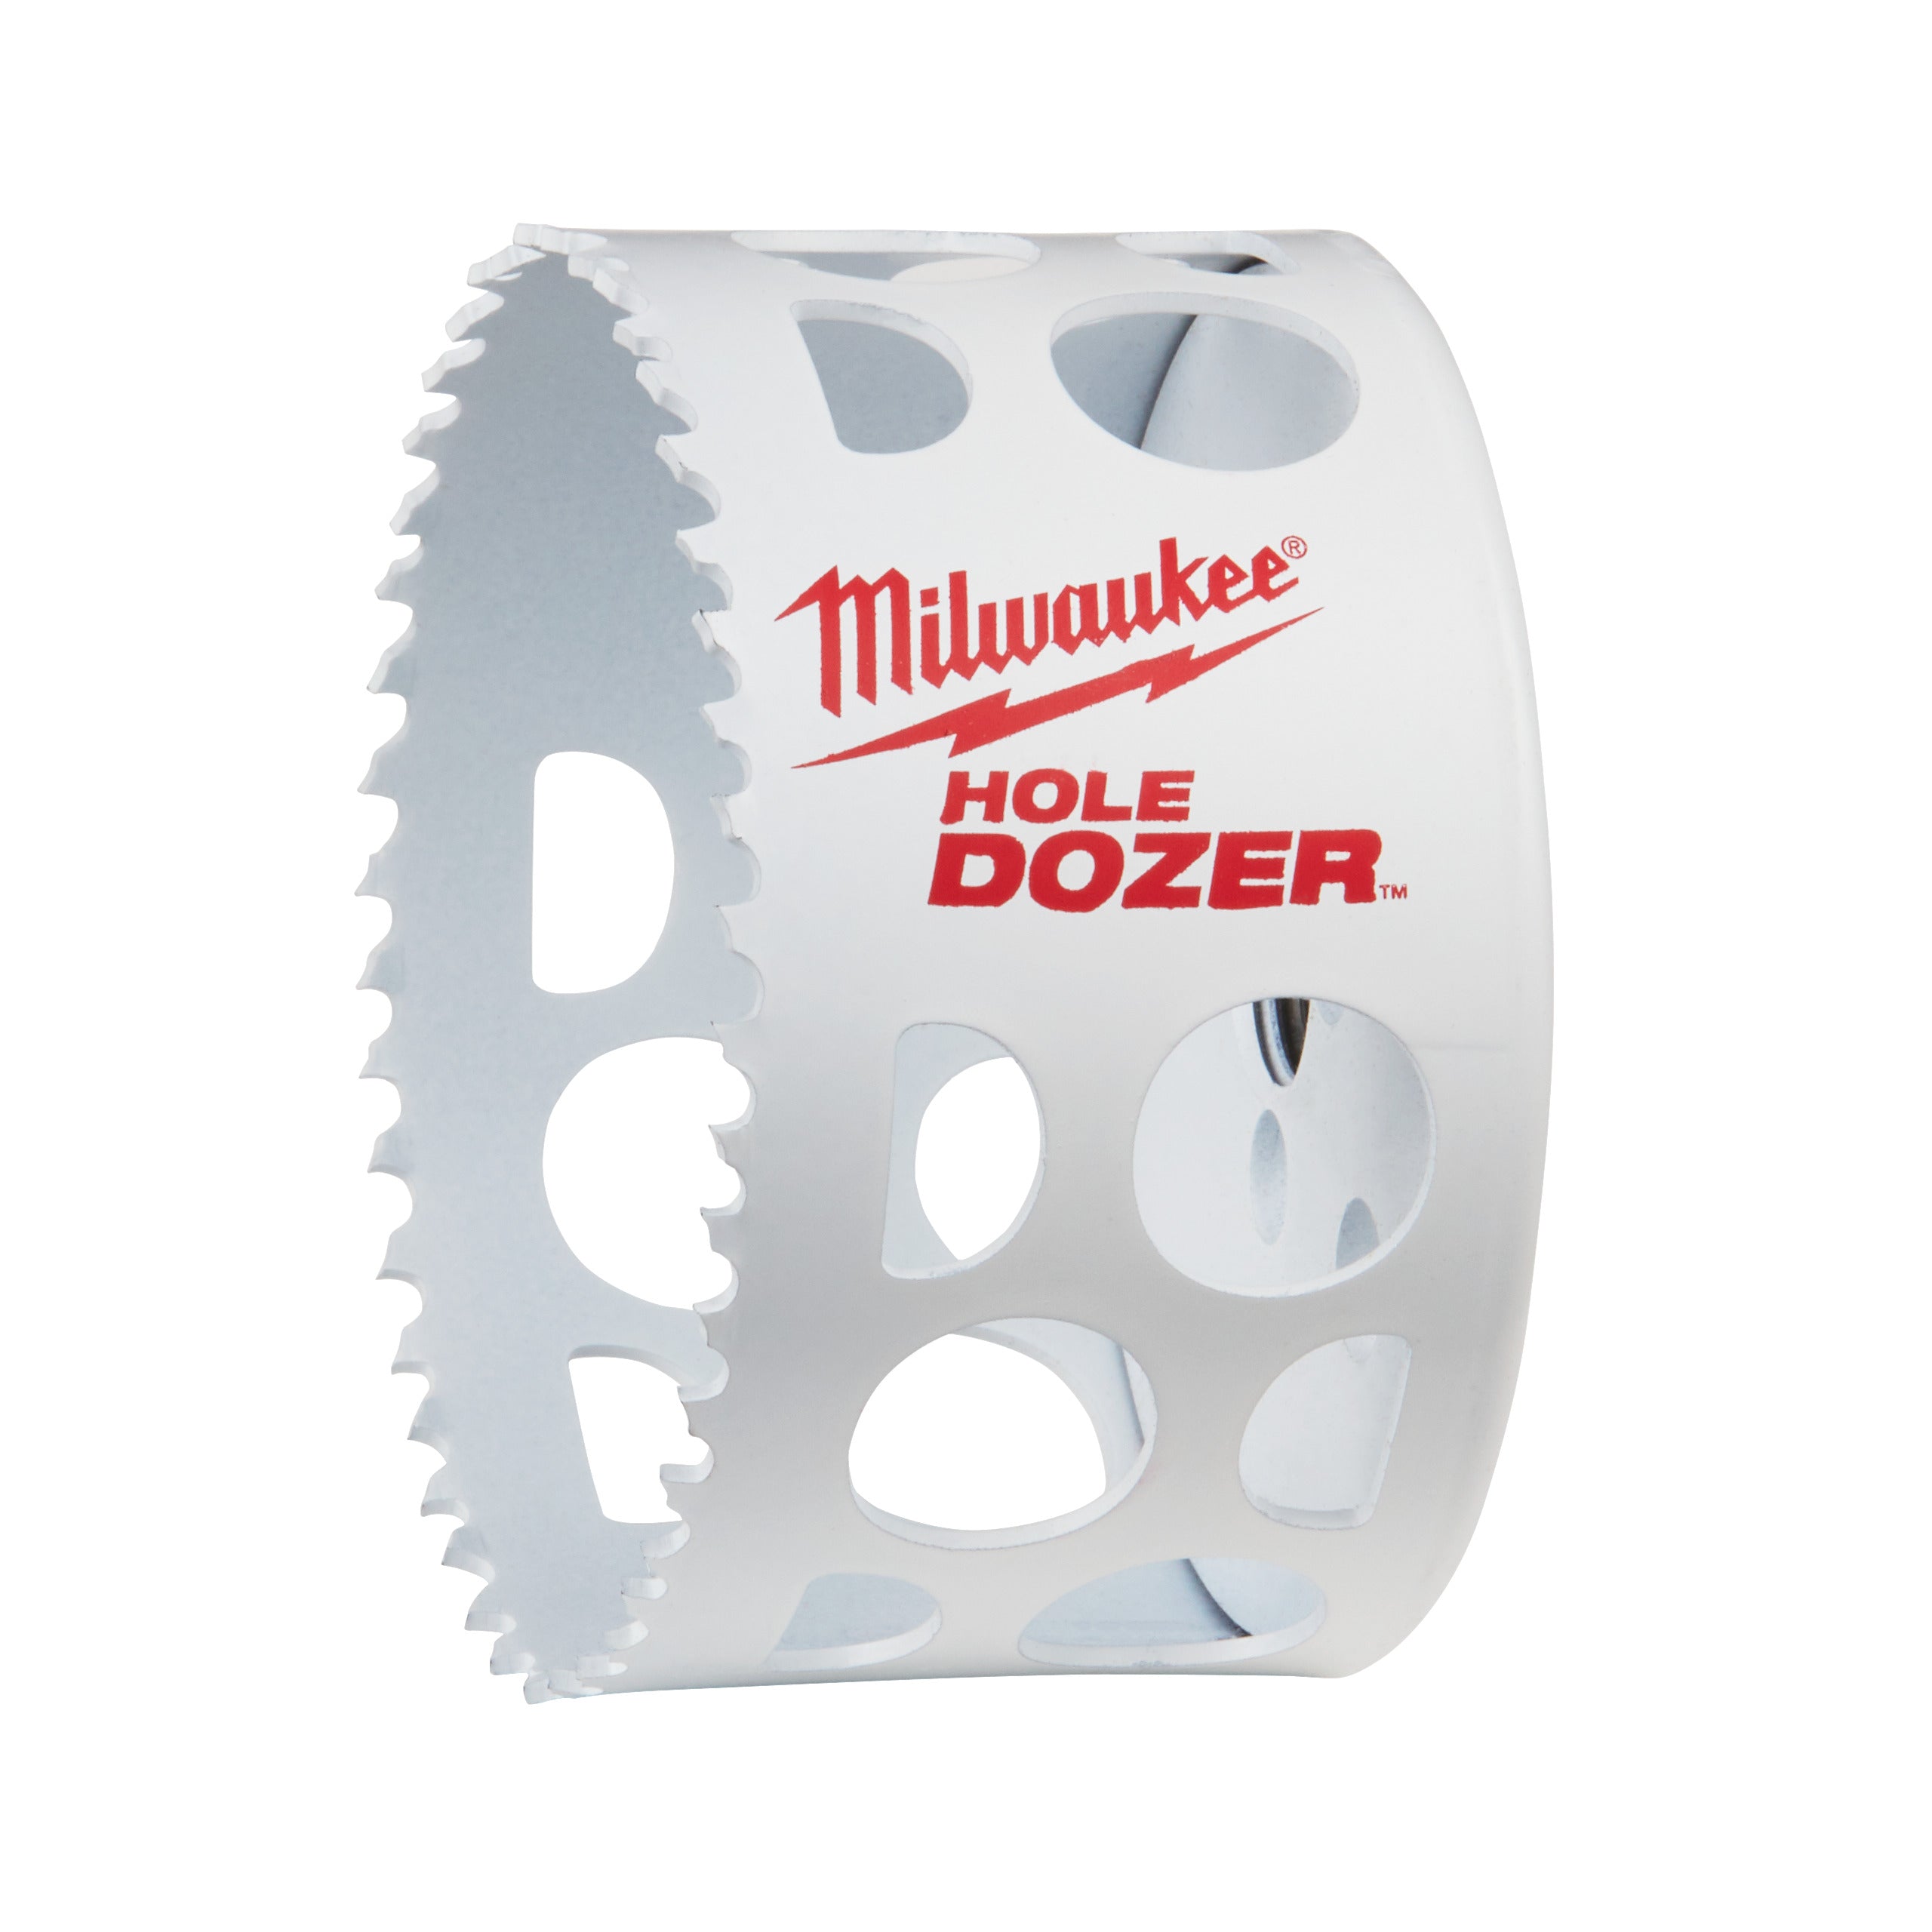 Carotă Milwaukee HOLE DOZER™ bi-metal HCS Ø83 mm 49560183